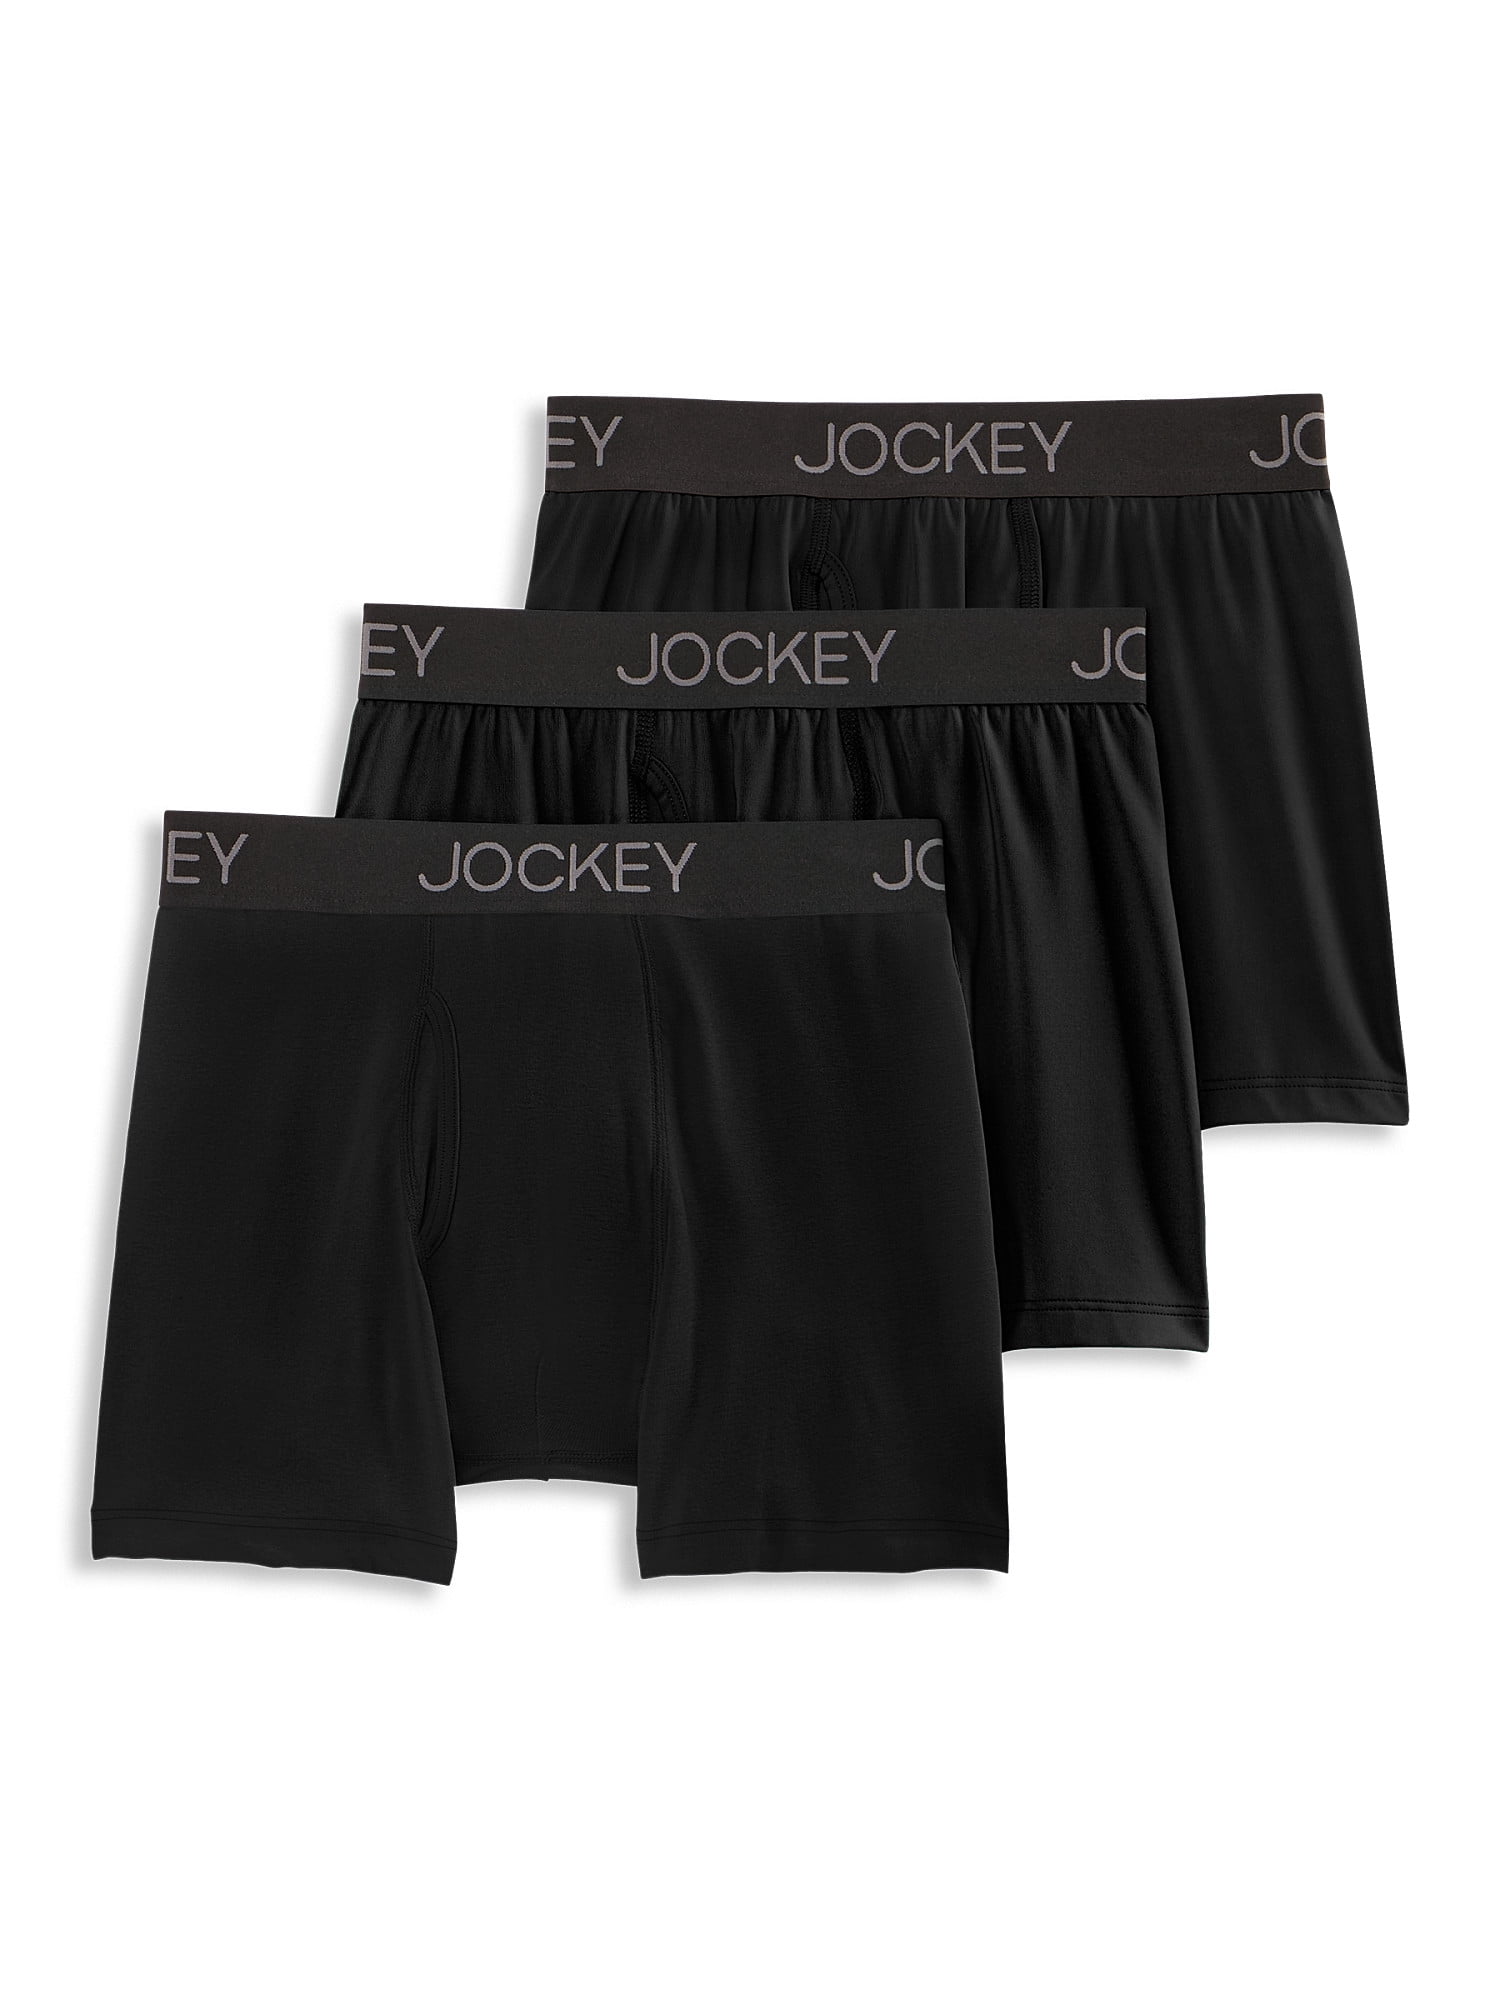 2 Jockey Assorted Striped Boys Brief Multi-Color 5-12 Years Underwear Daily  Use 